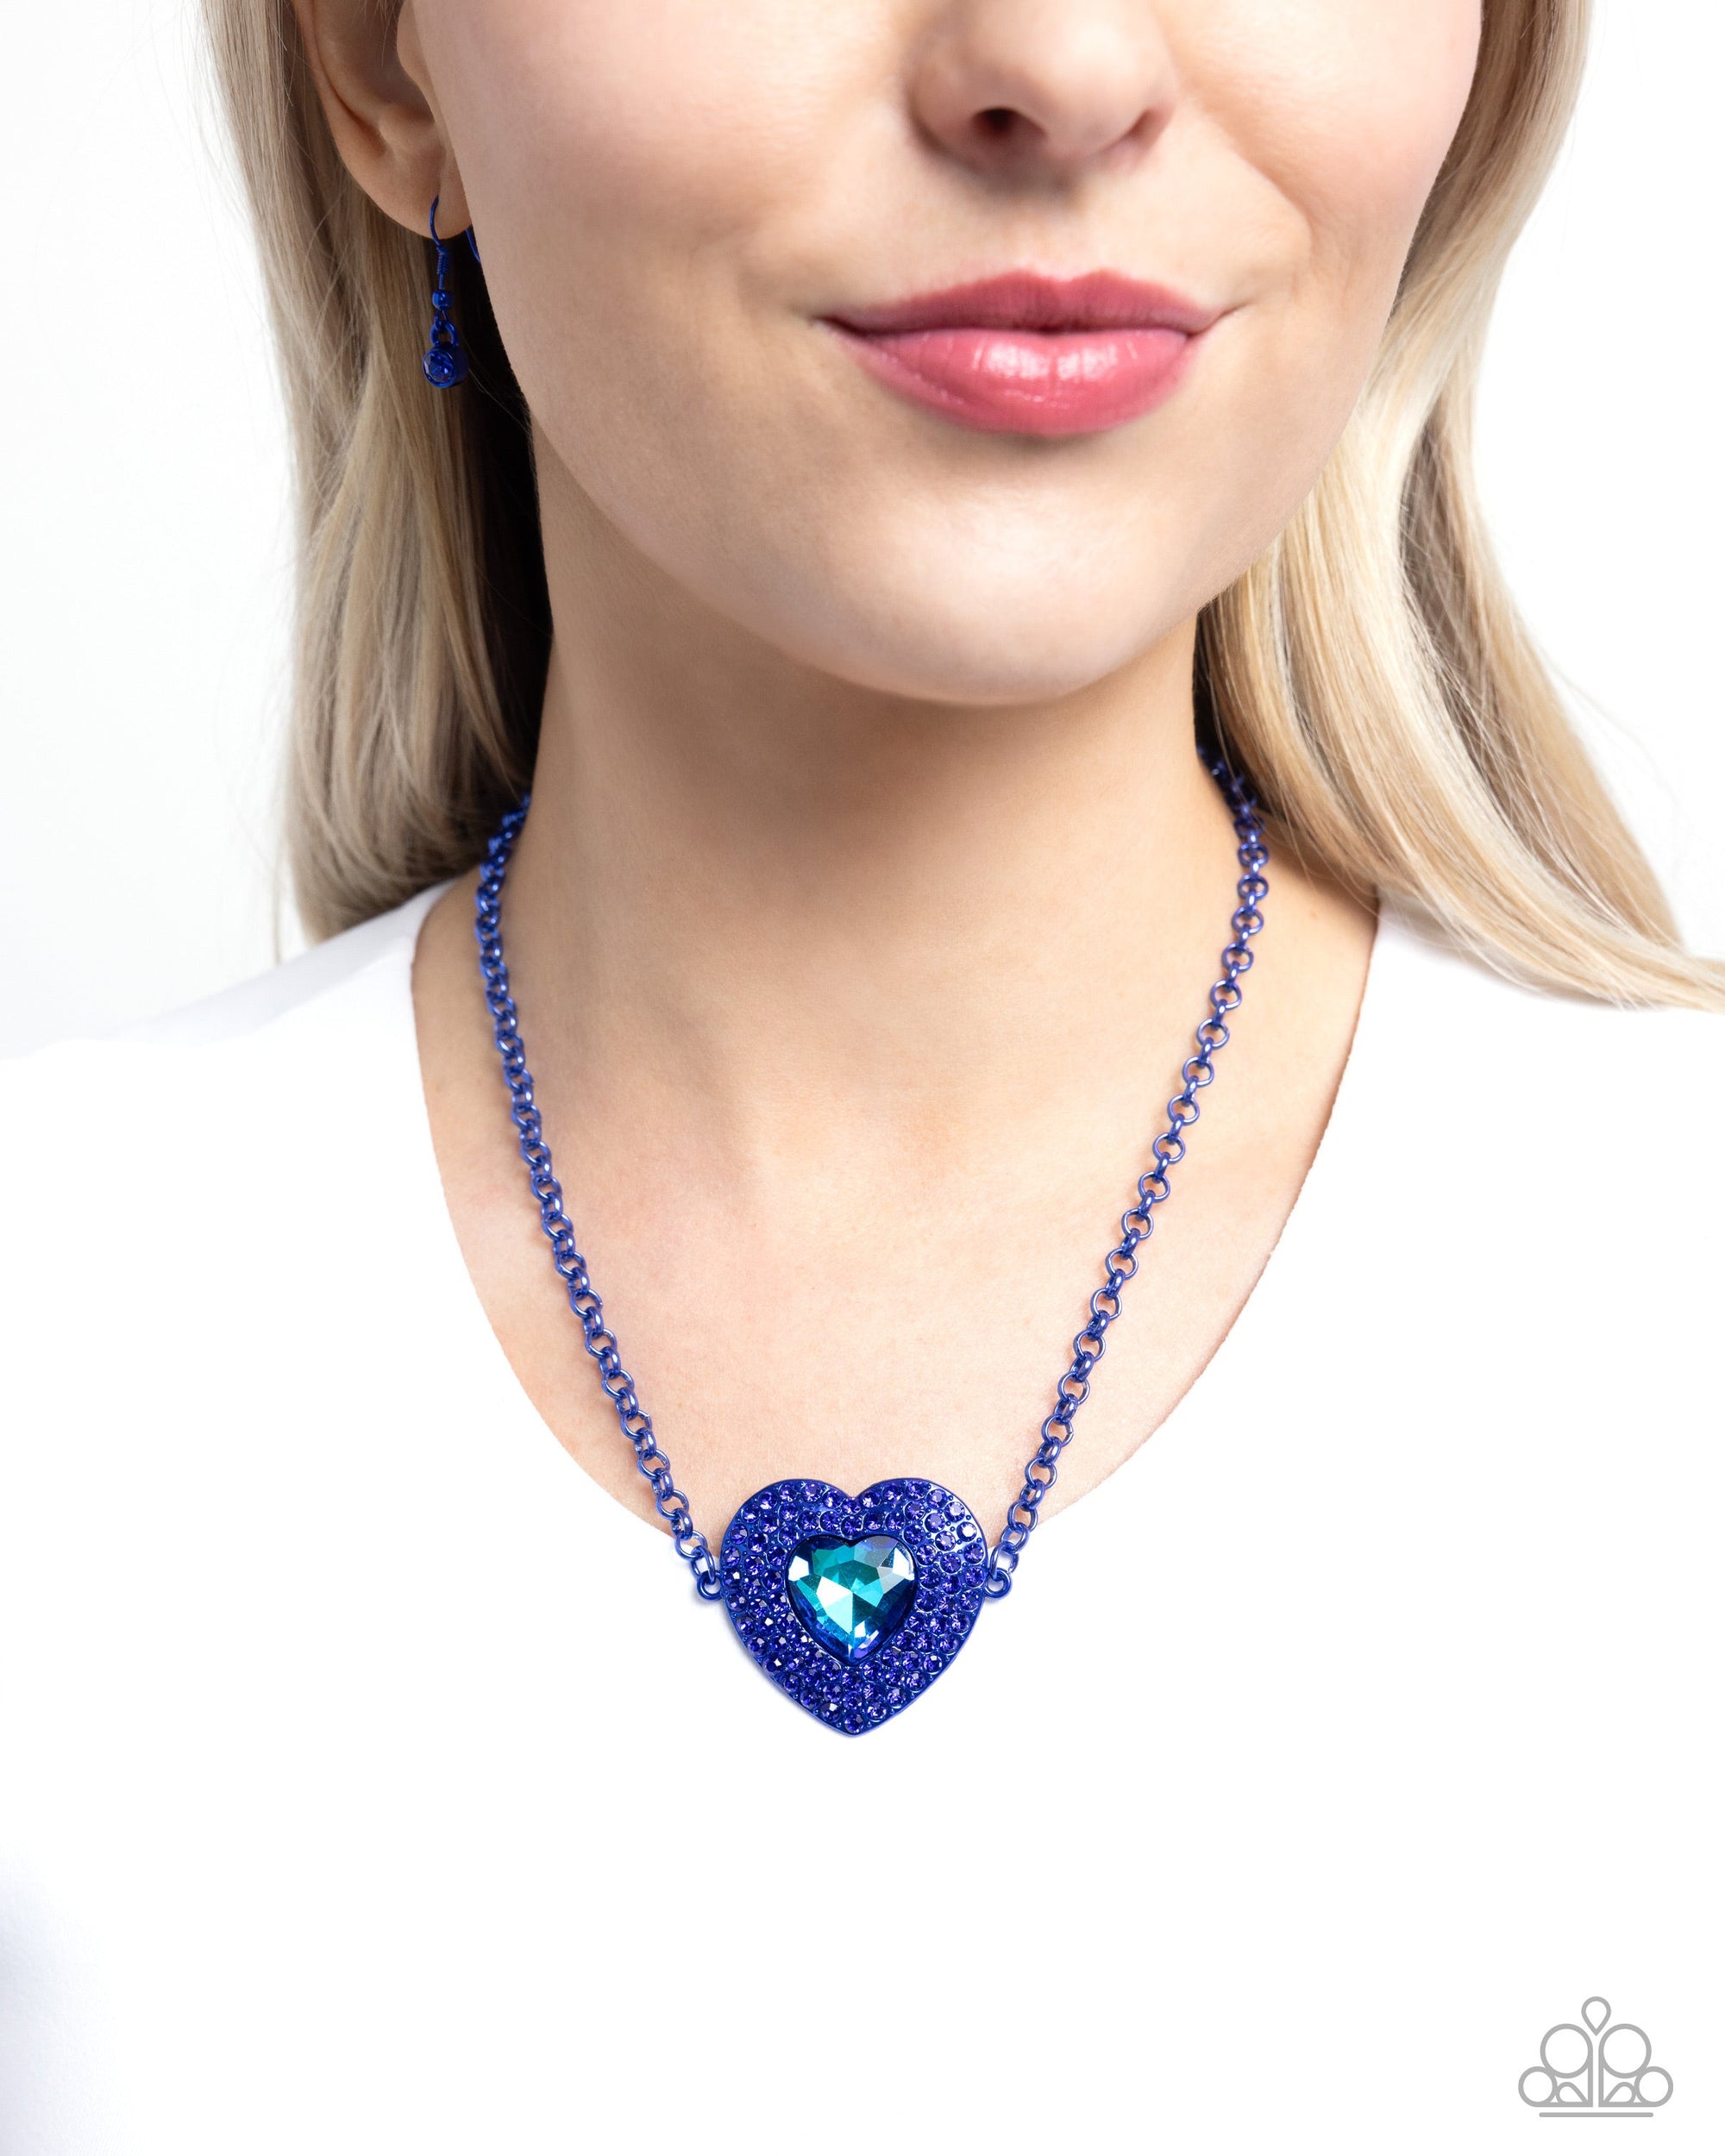 Locket Leisure Blue Rhinestone Heart Necklace - Paparazzi Accessories- lightbox - CarasShop.com - $5 Jewelry by Cara Jewels